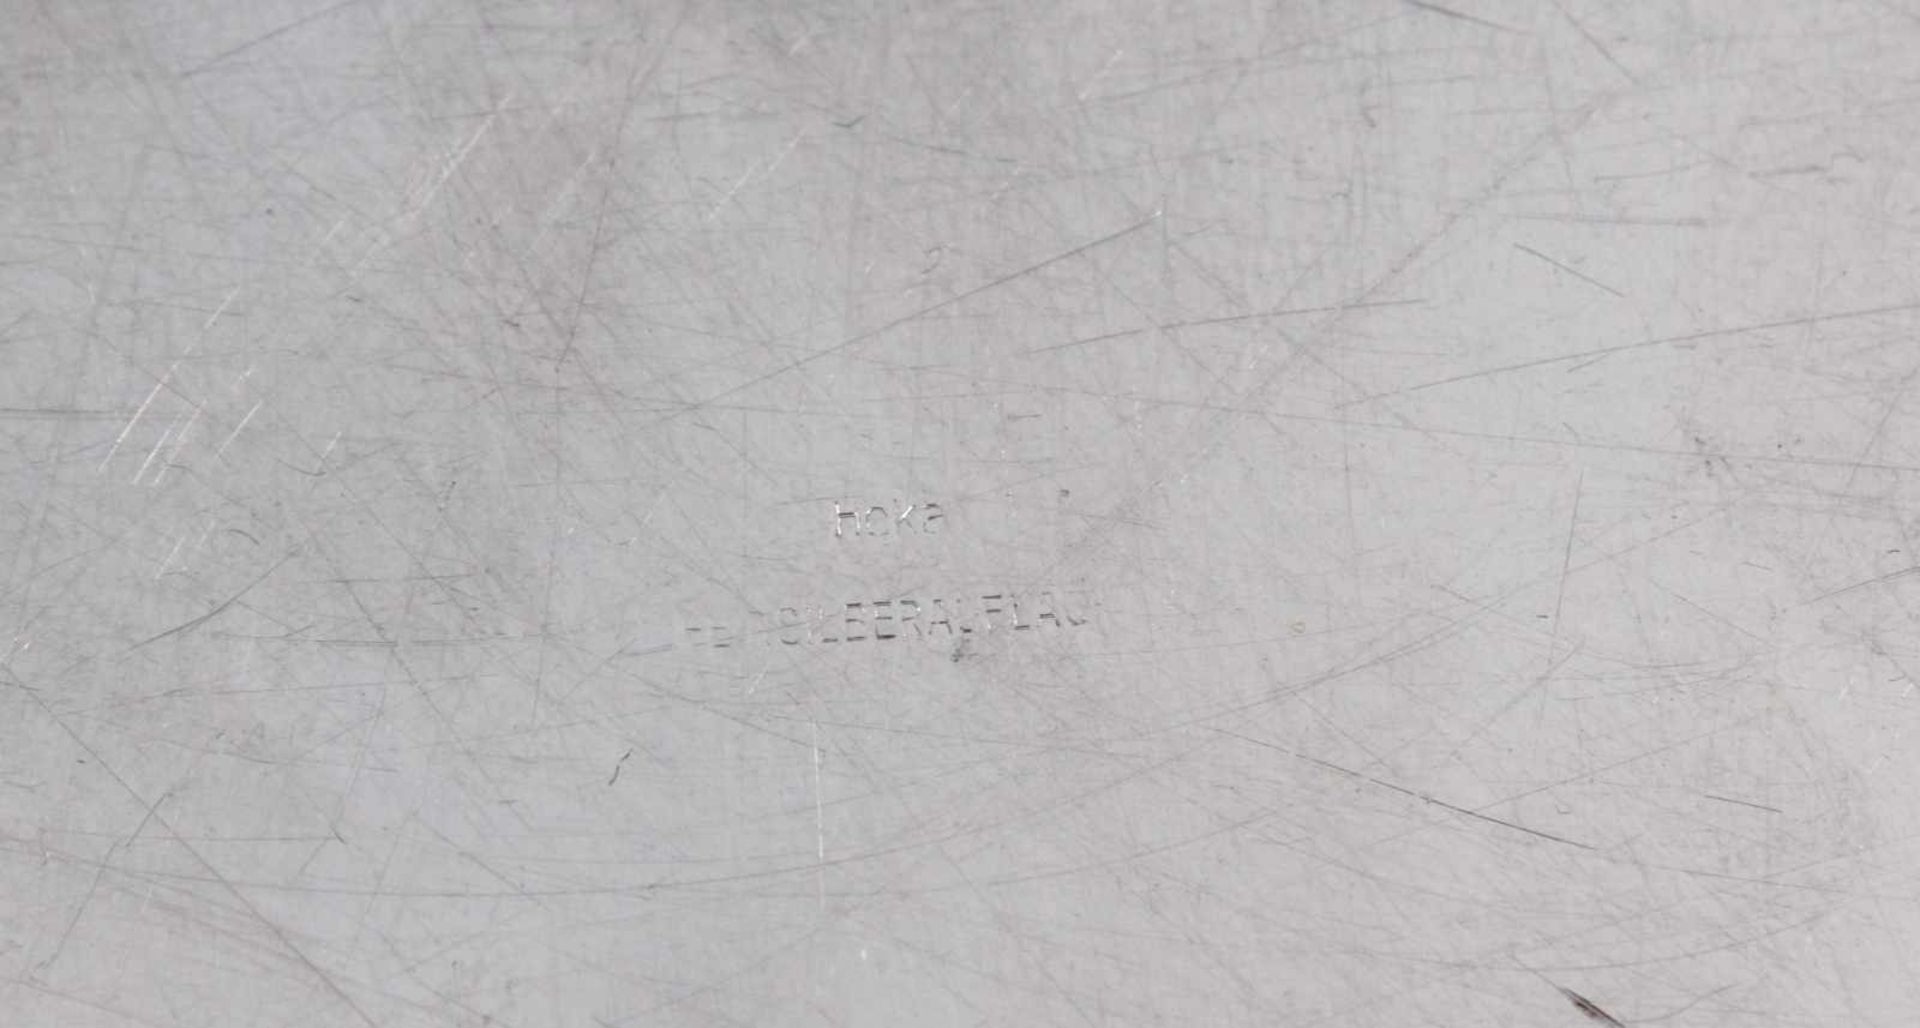 Versilberte SchaleSchale, quadratische Form, geringer Gebrauchsspuren, ca. 23,5 x 23,5 cm, ca. 400 - Bild 3 aus 3